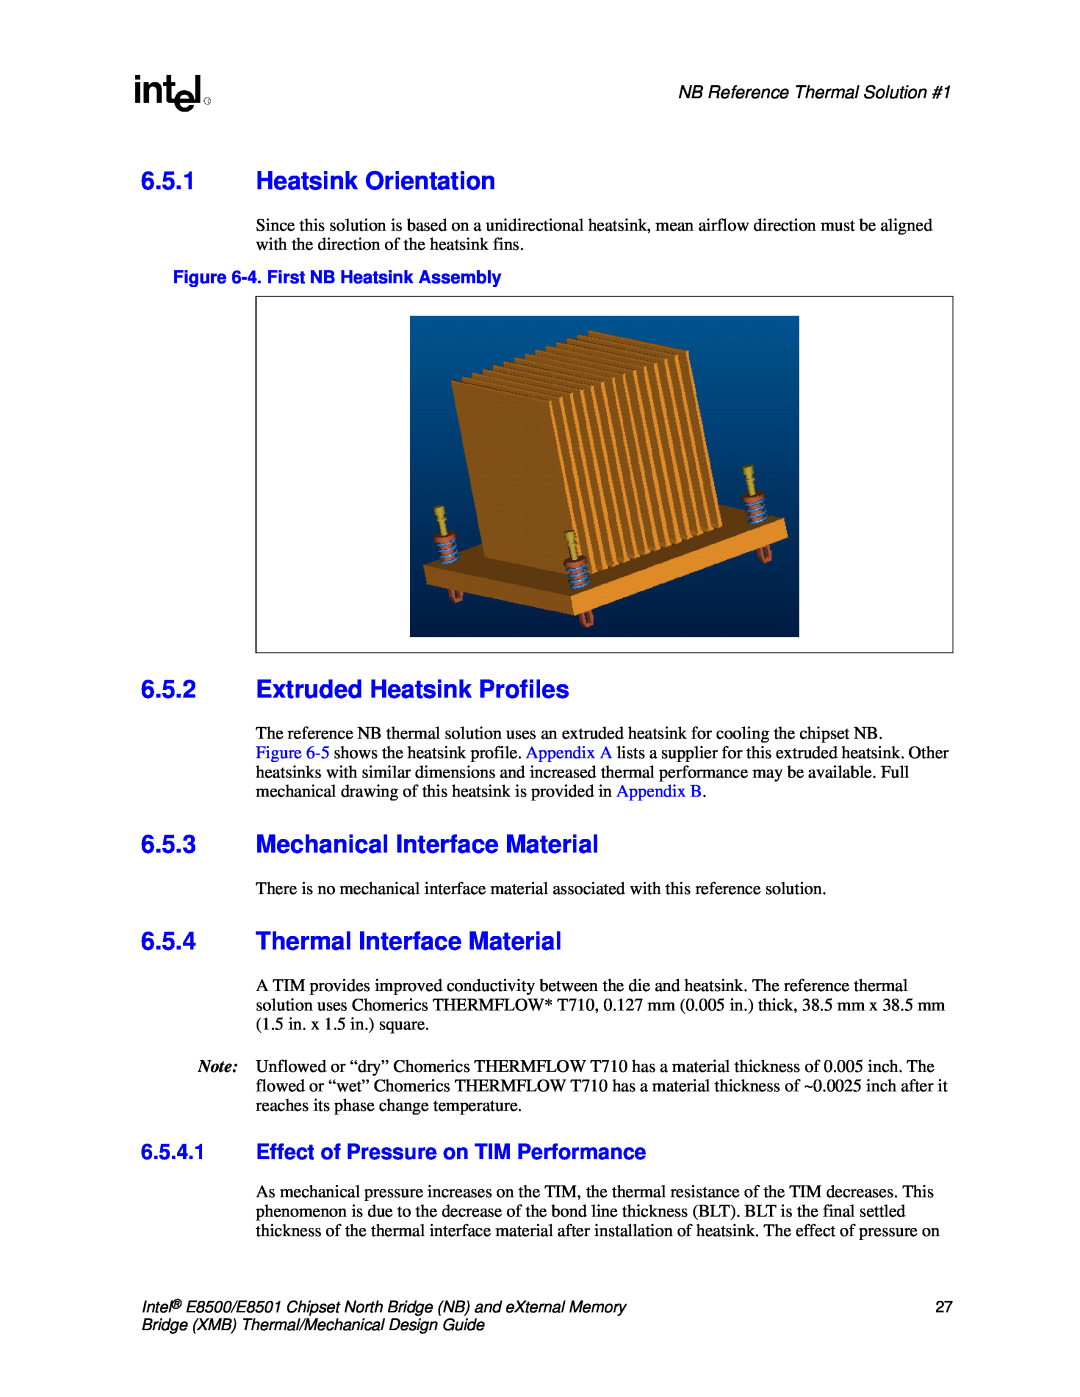 Intel E8501 manual 6.5.1Heatsink Orientation, 6.5.2Extruded Heatsink Profiles, 6.5.3Mechanical Interface Material 